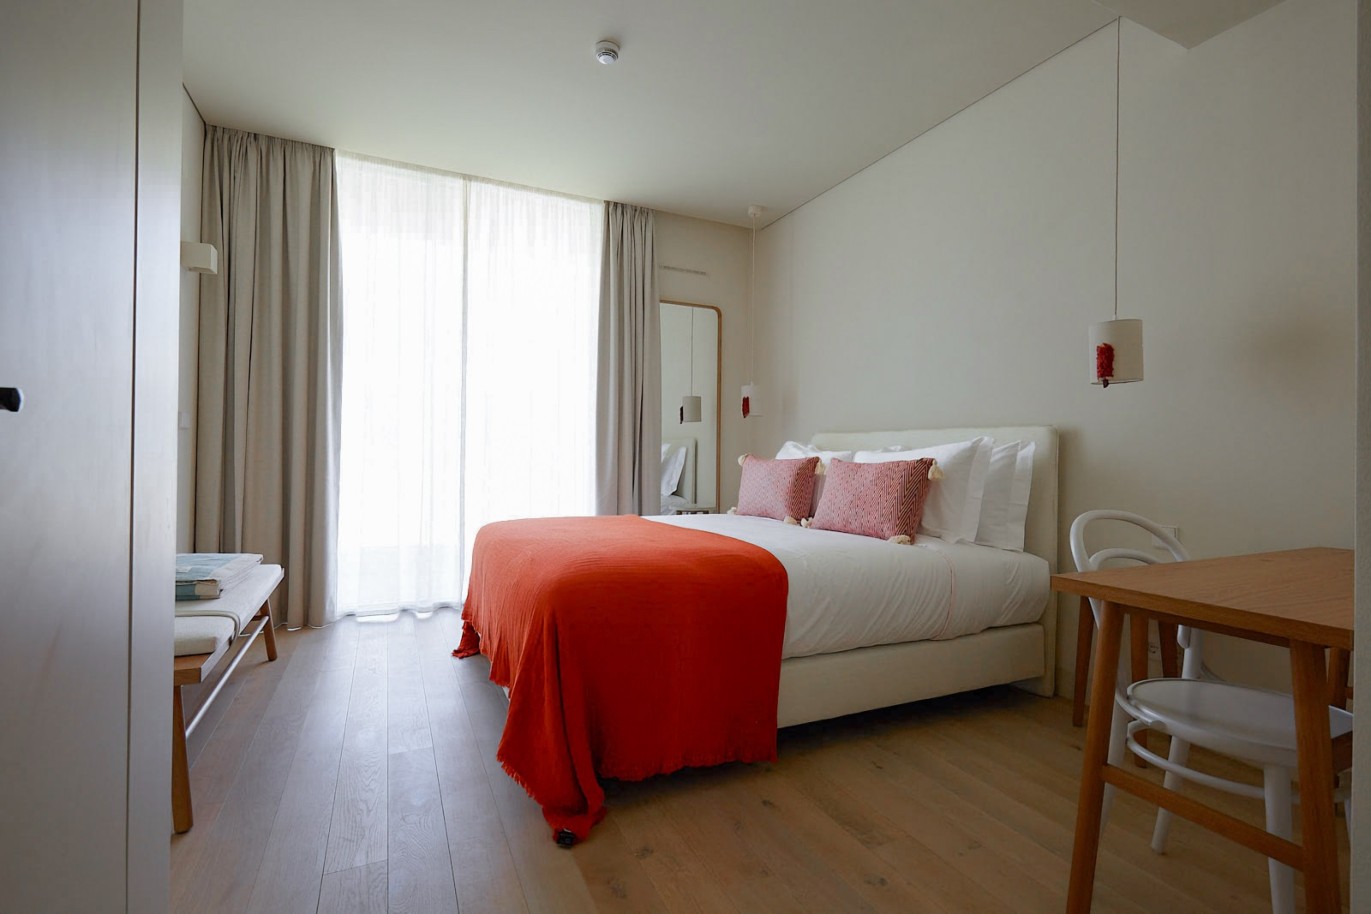 2 bedroom apartment in resort, for sale in Porches, Algarve_228717